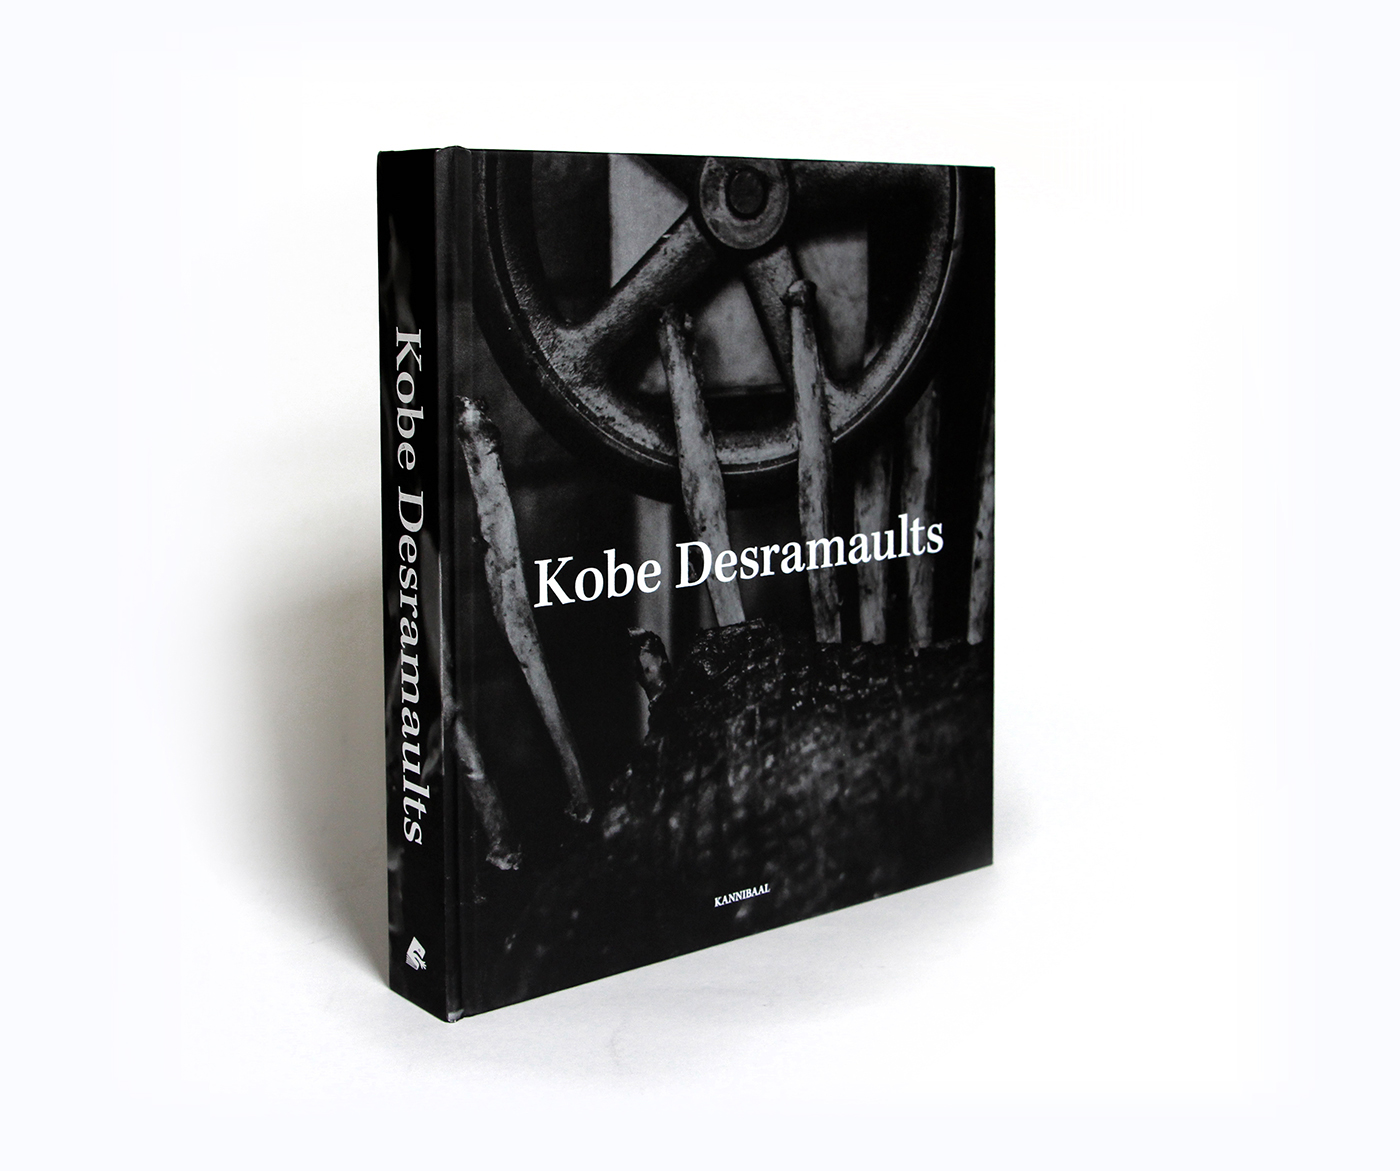 kobe desramaults in de wulf chambre separee book design cover design cookbook Tim Bisschop Grafisch atelier brugge gent